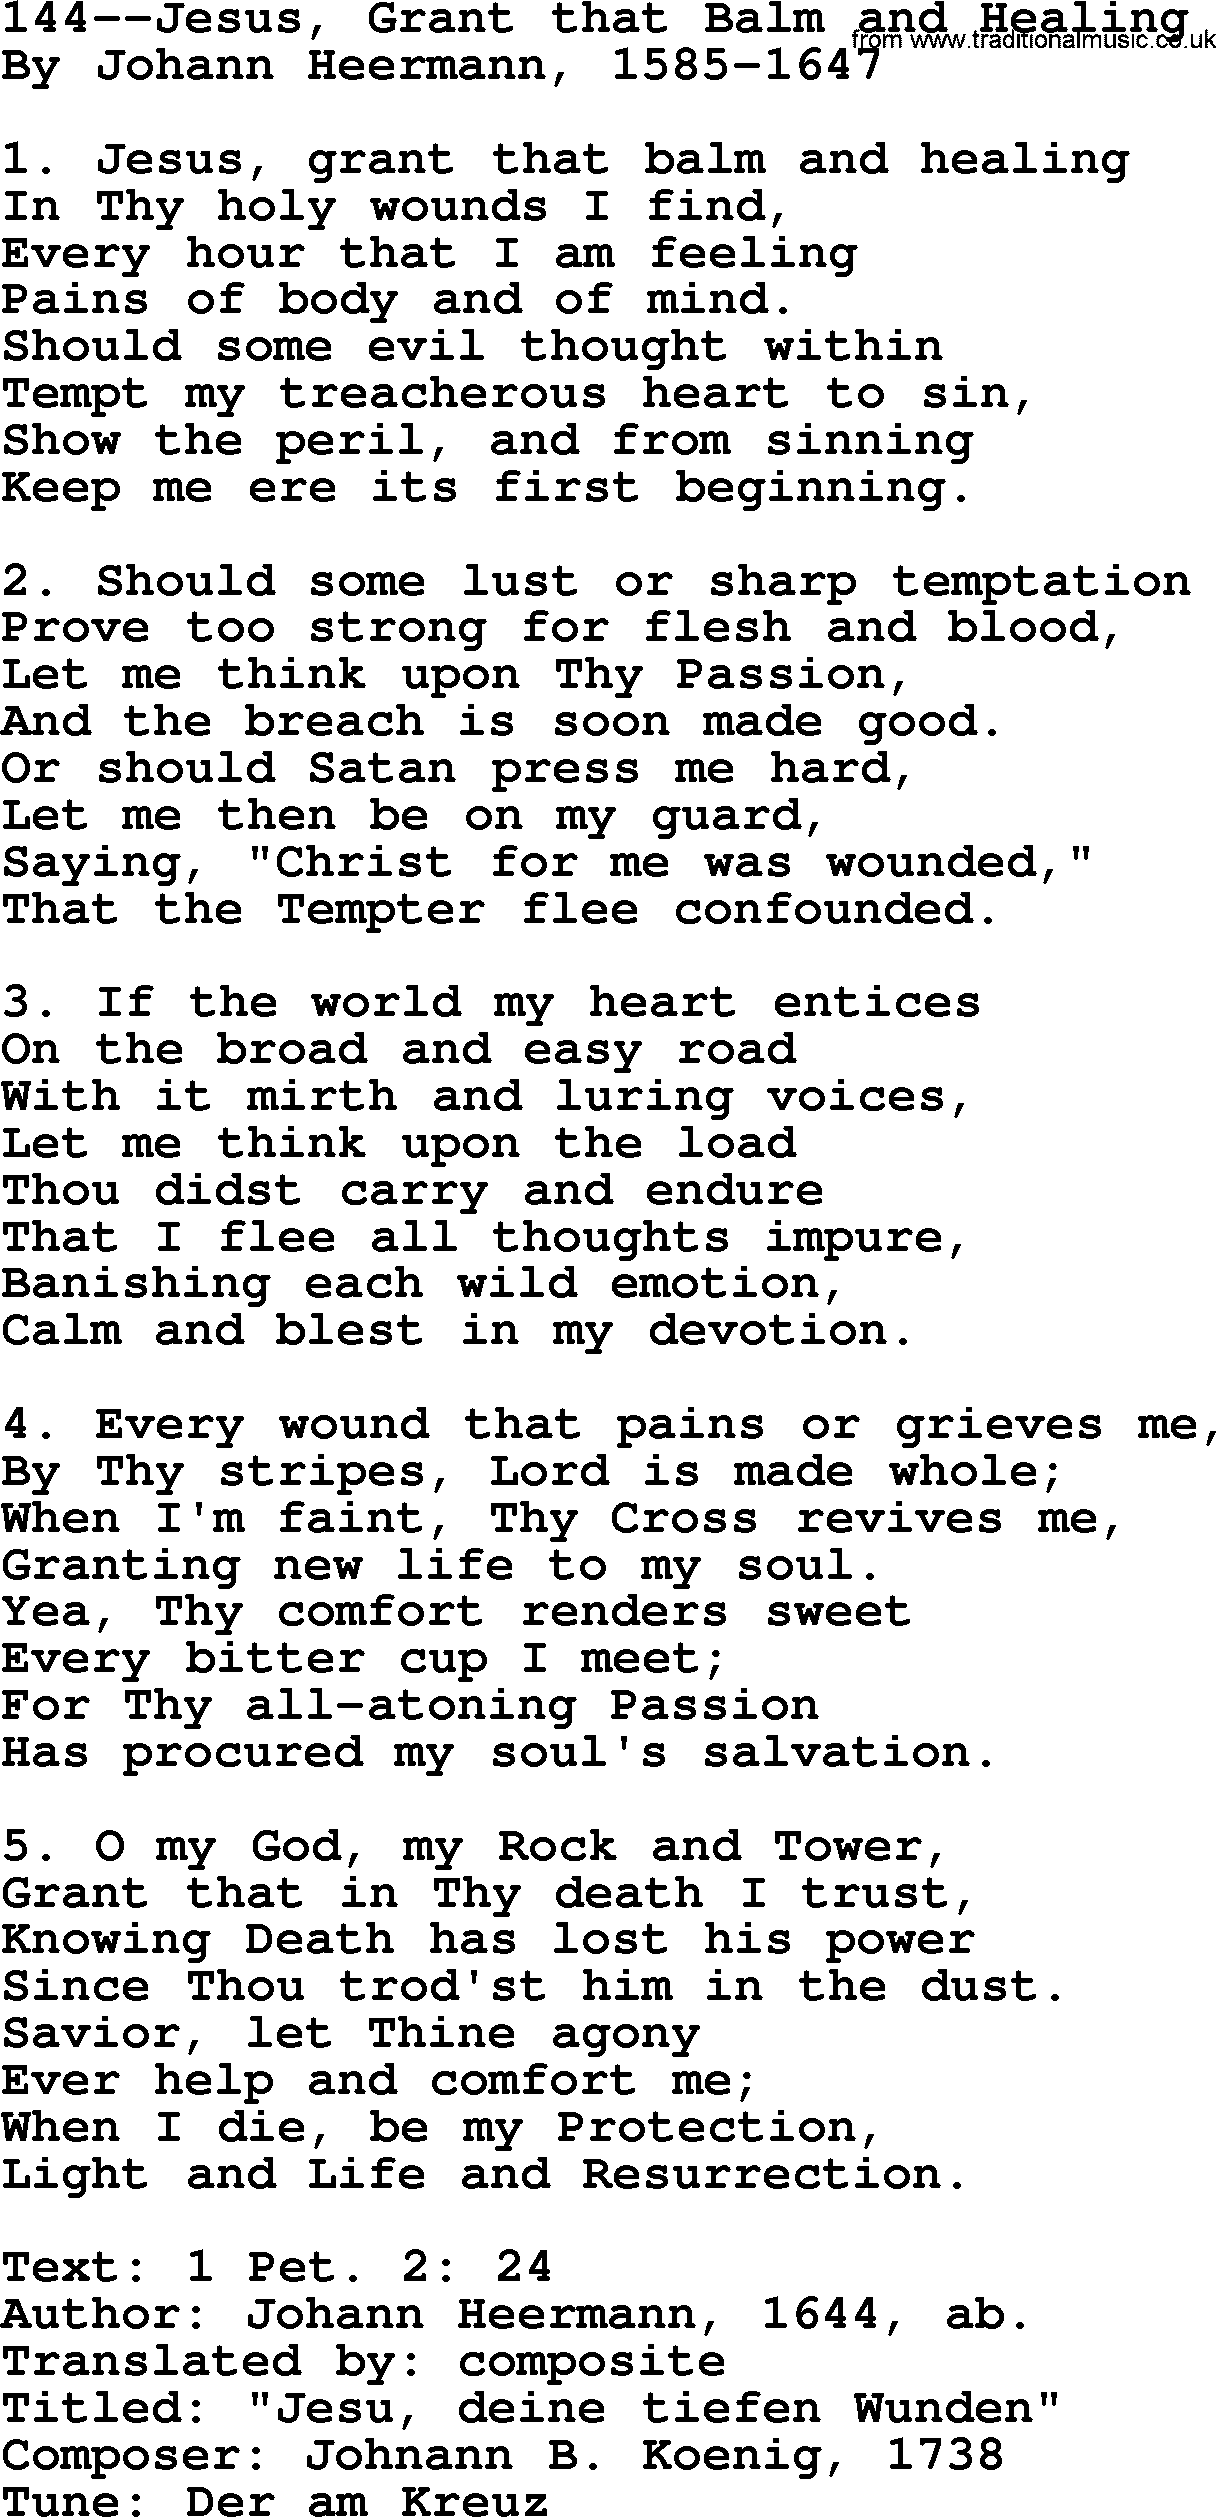 Lutheran Hymn: 144--Jesus, Grant that Balm and Healing.txt lyrics with PDF